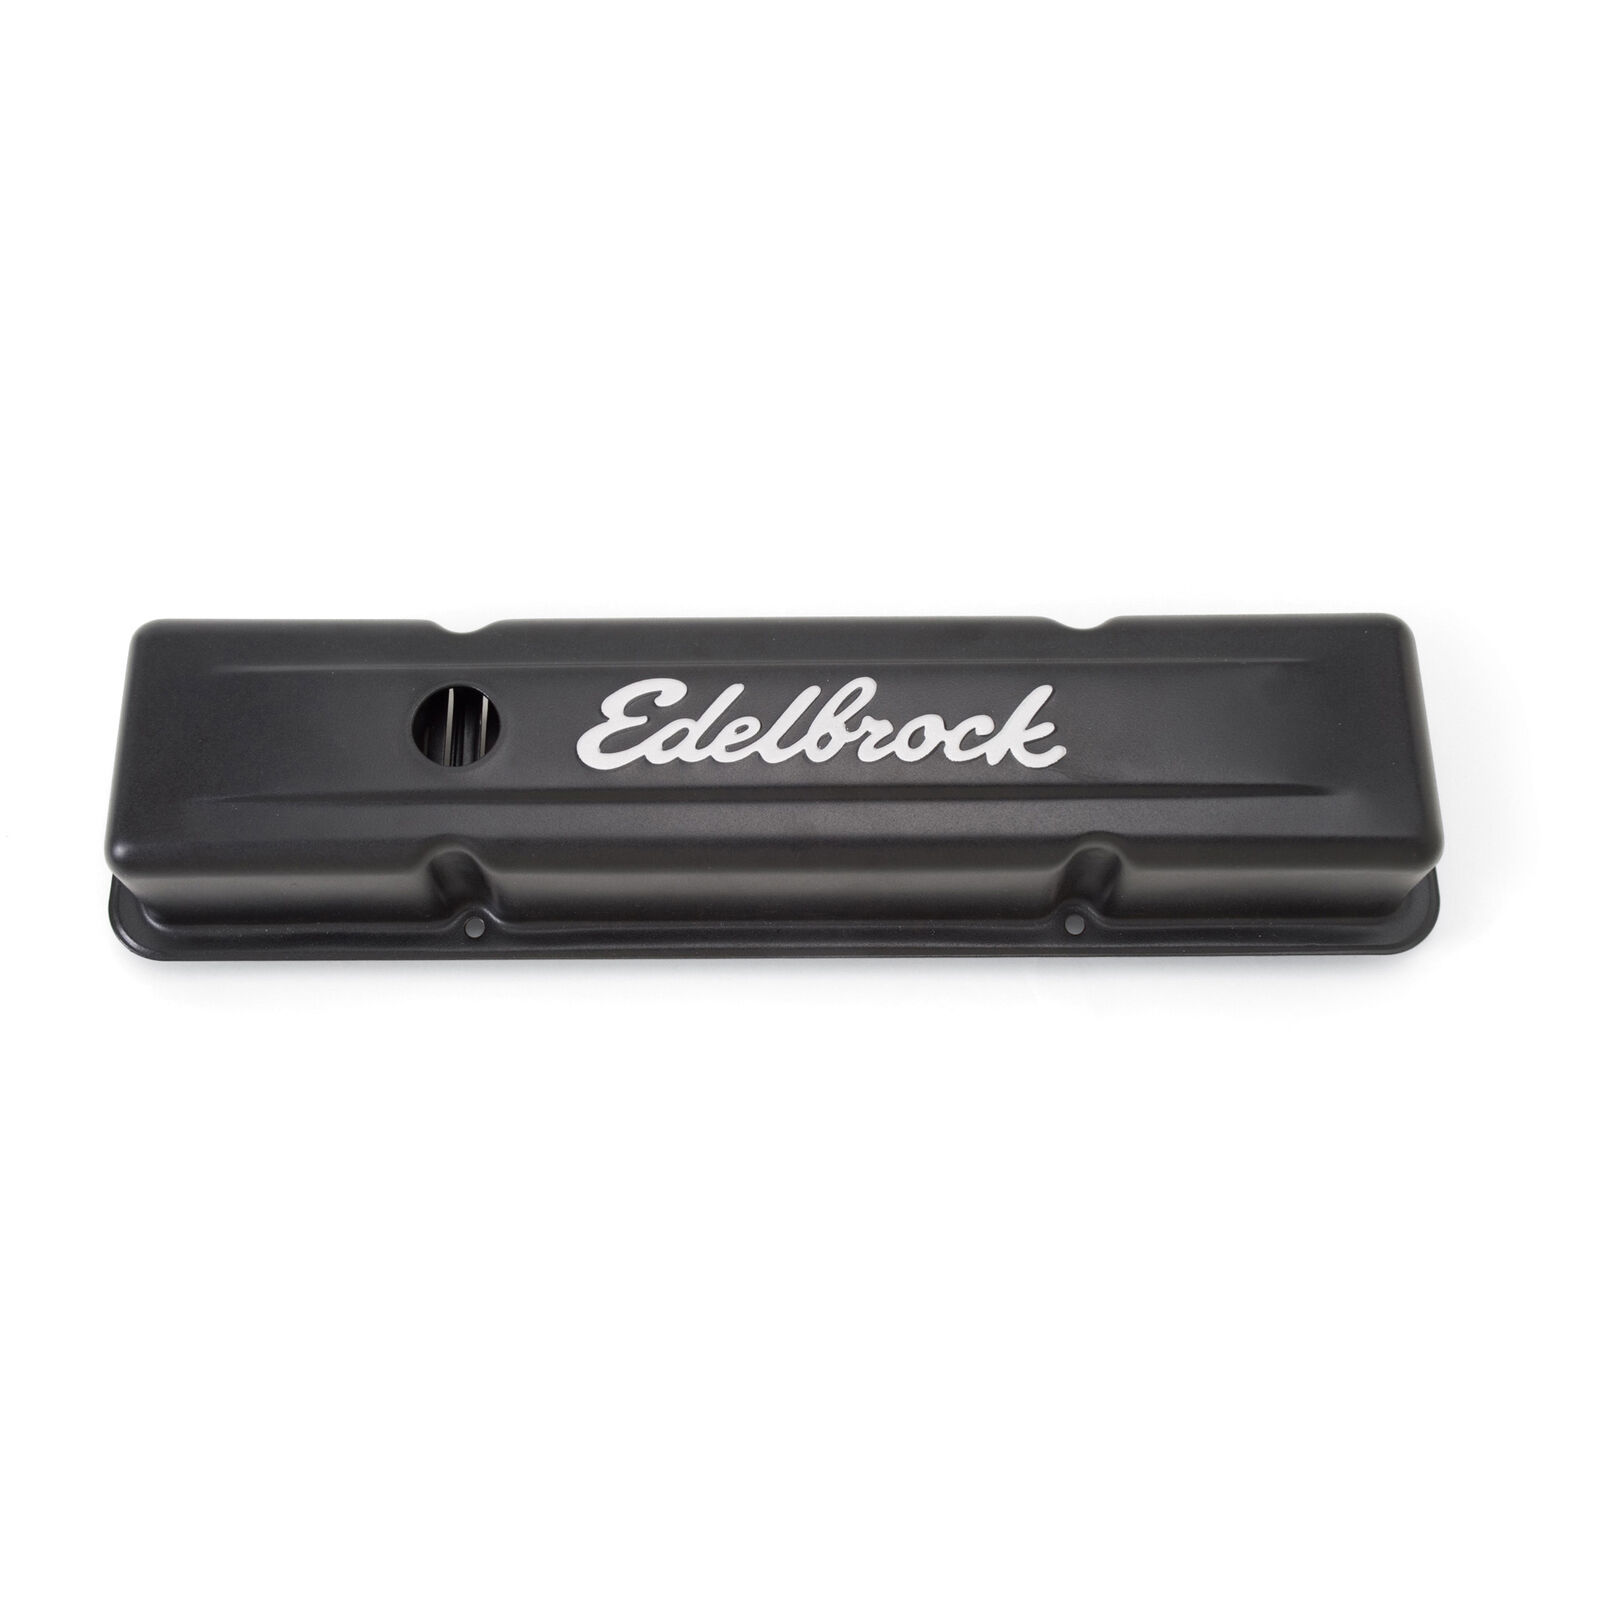 Edelbrock Signature Series Black Valve Covers 4443 Chevy SBC 283 305 350 400